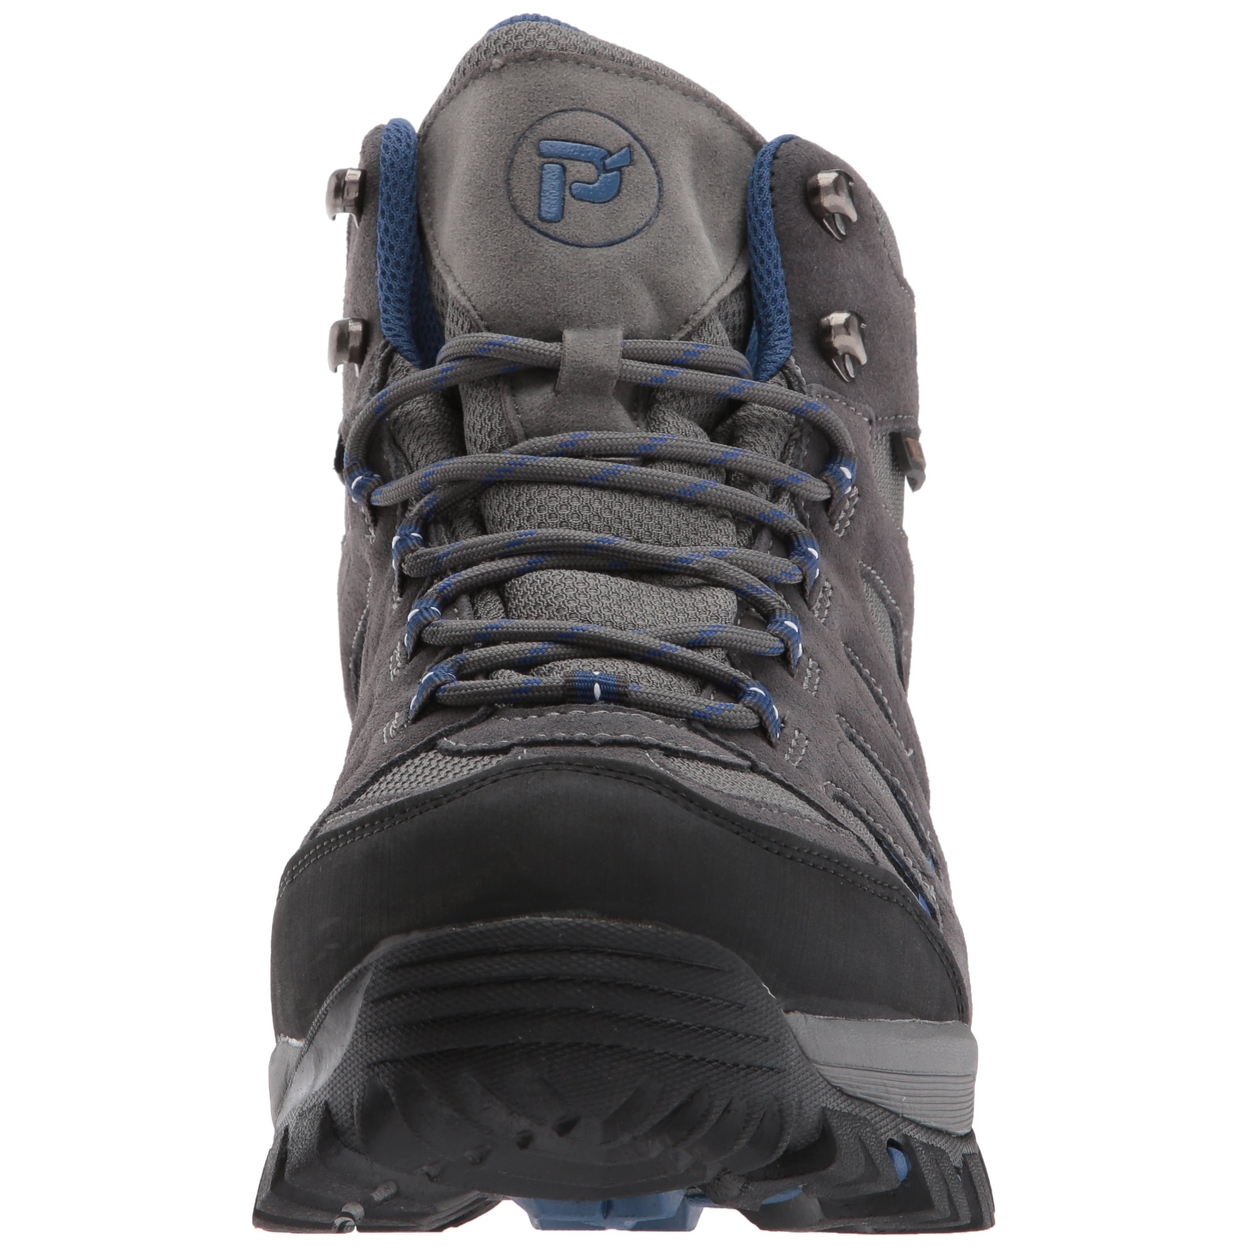 Propet Men's Ridge Walker Hiking Boot Grey/Blue - M3599GRB GREY/BLUE - GREY/BLUE, 13-2E